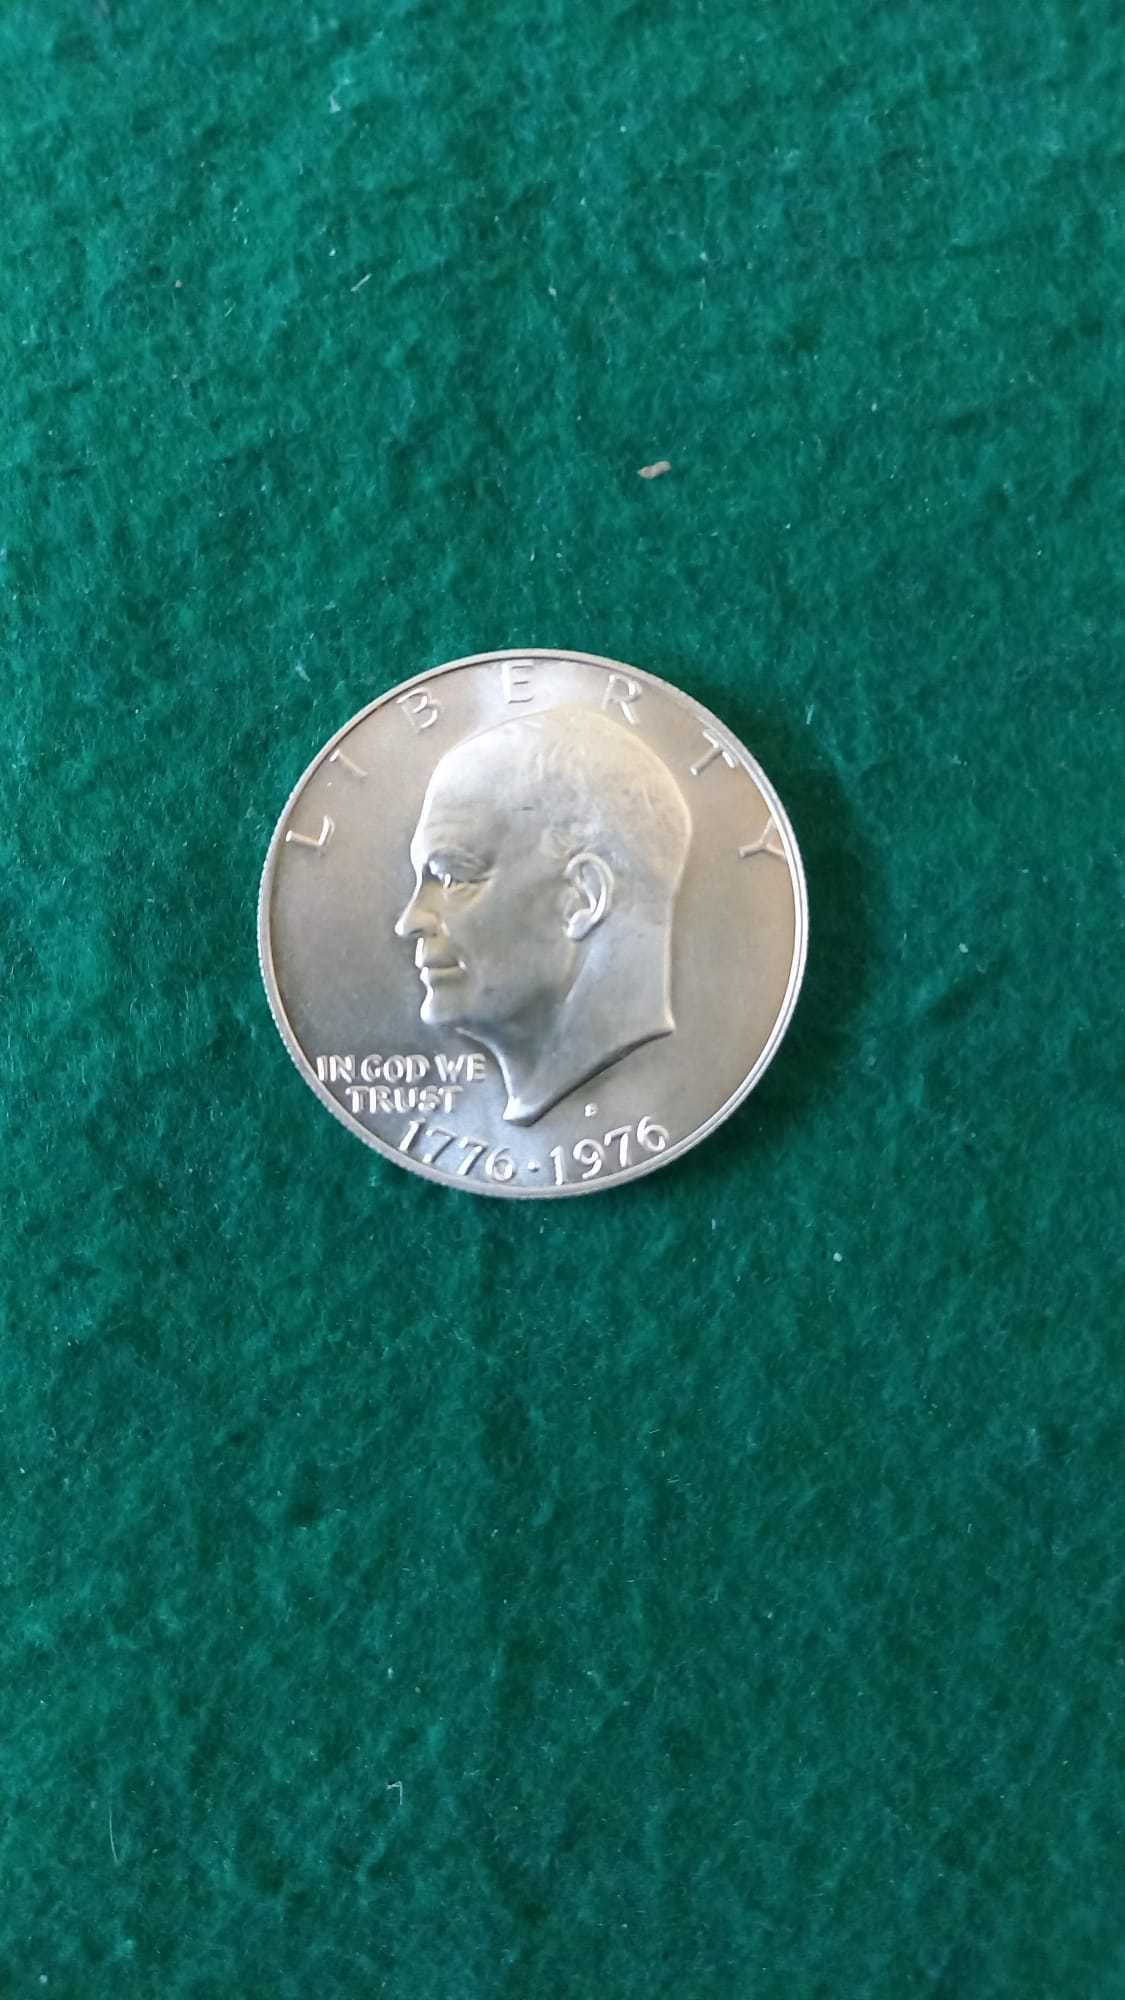 Moneta 1 dolar D. Einsenhower okolicznościowa, srebro.